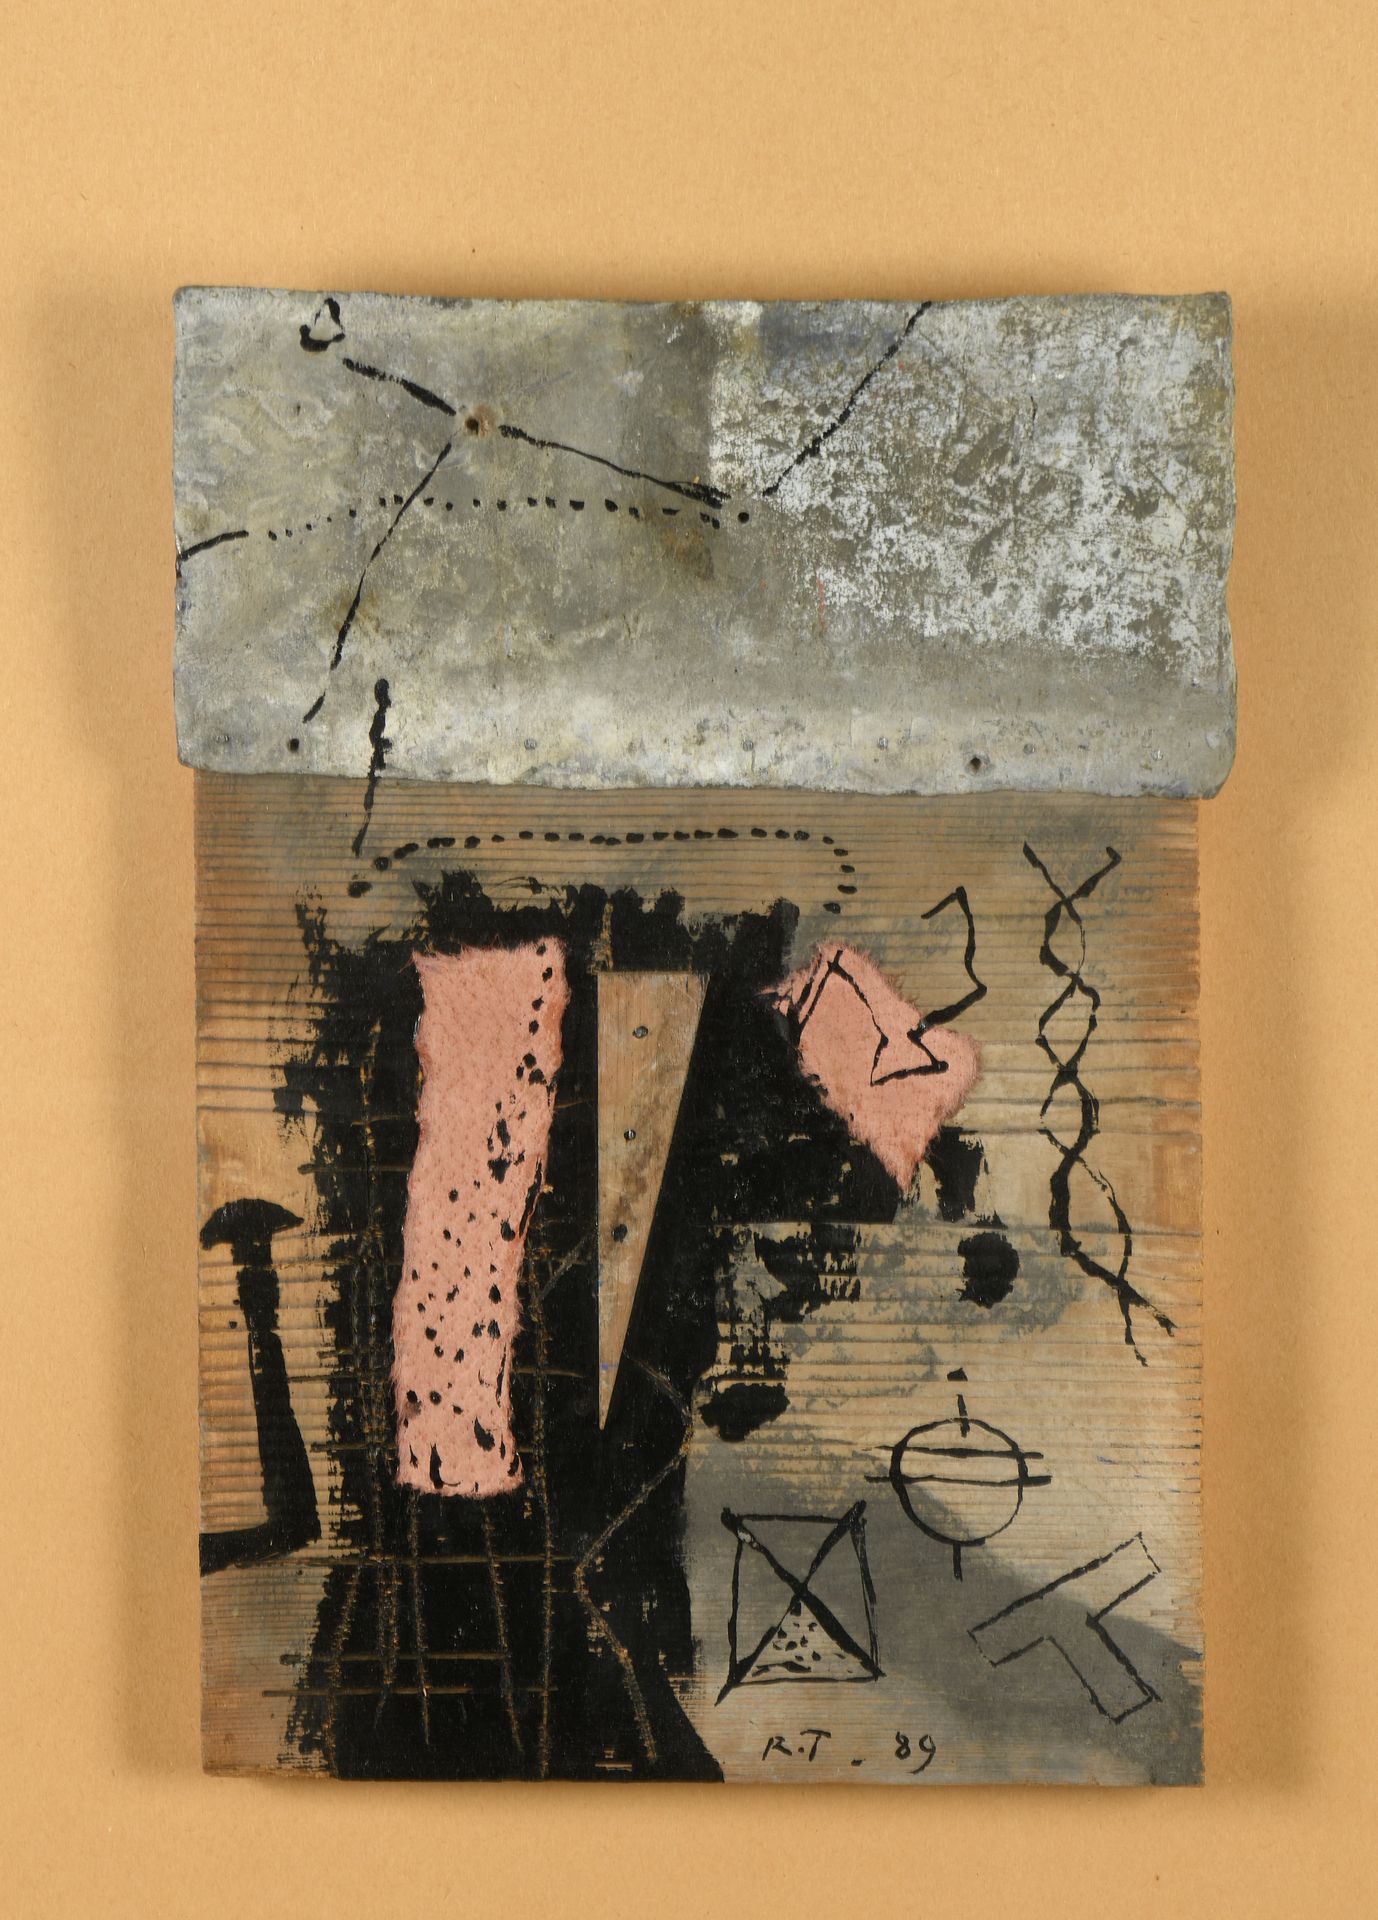 Null 理查德-特克斯尔（生于1955年）
无题，1989
丙烯酸和墨水在木头和金属的组合上，底部中心有字母图案和日期。
36 x 26 cm 
作品放在一个&hellip;